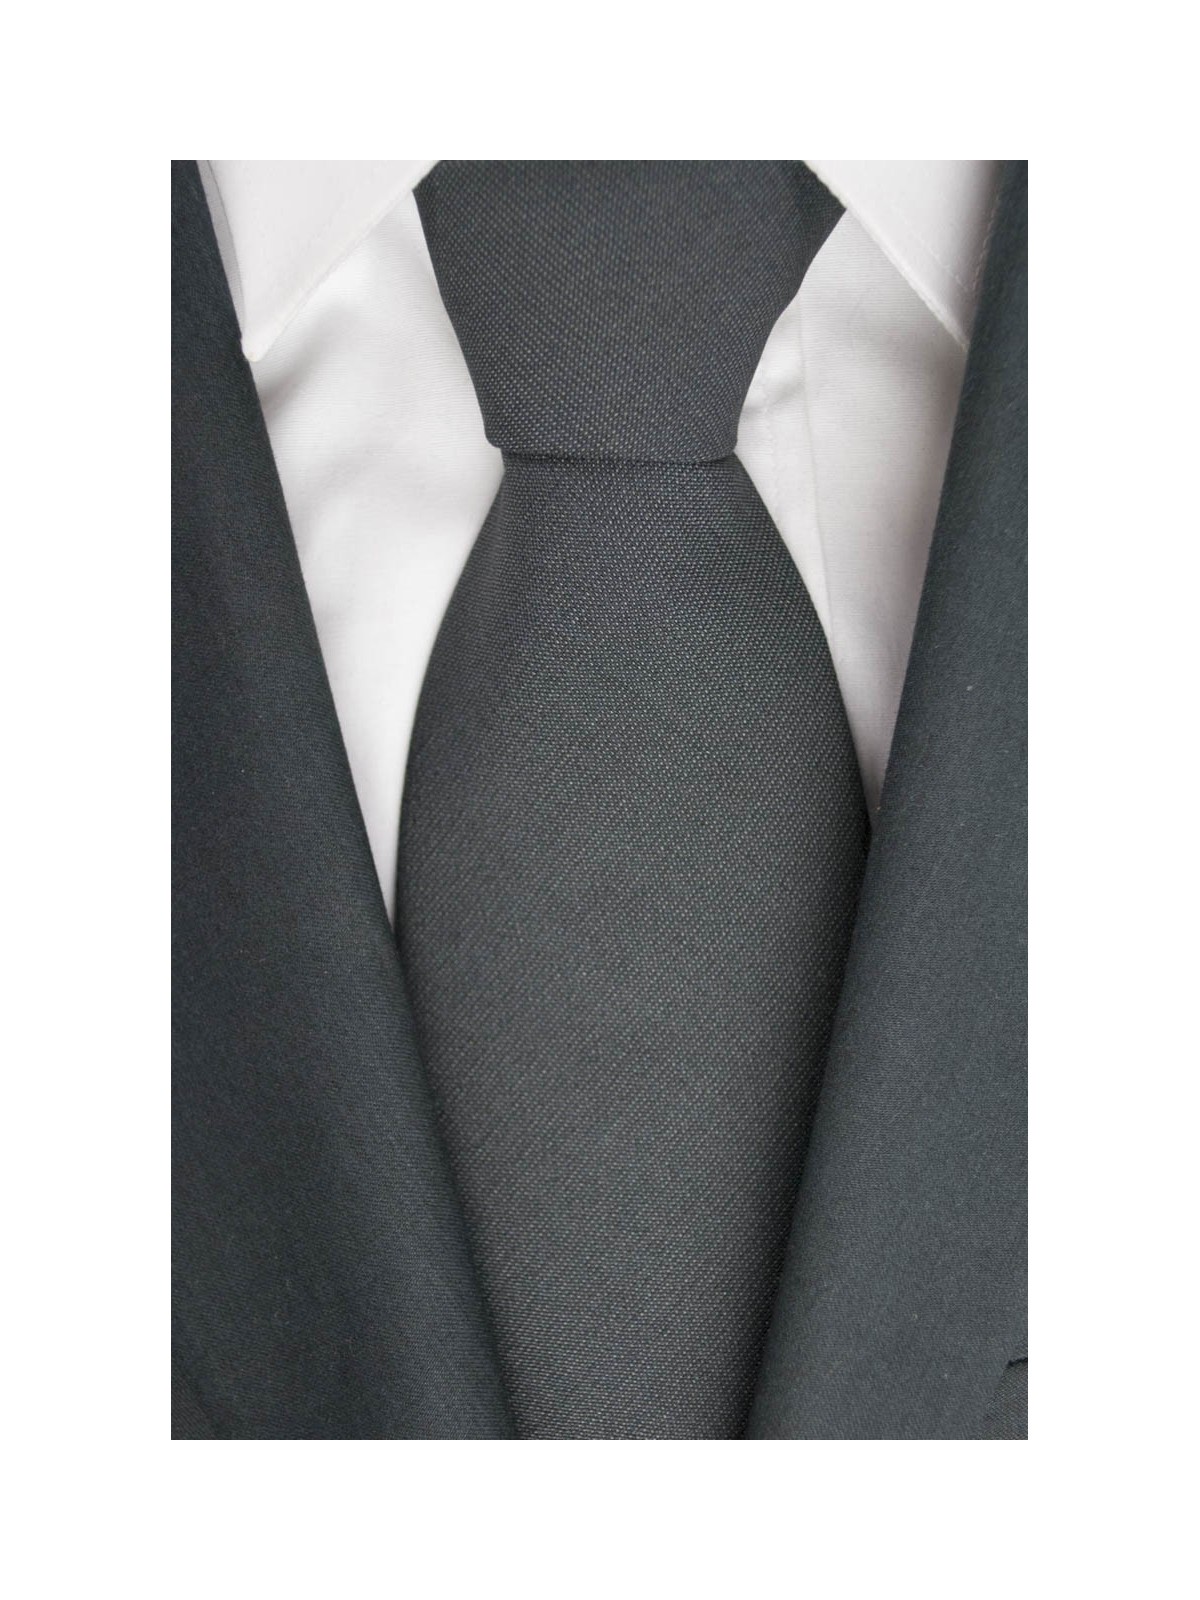 Krawatte 1° Classe Alviero Martini-dunkelgrau - 100% Wolle - Made in Italy